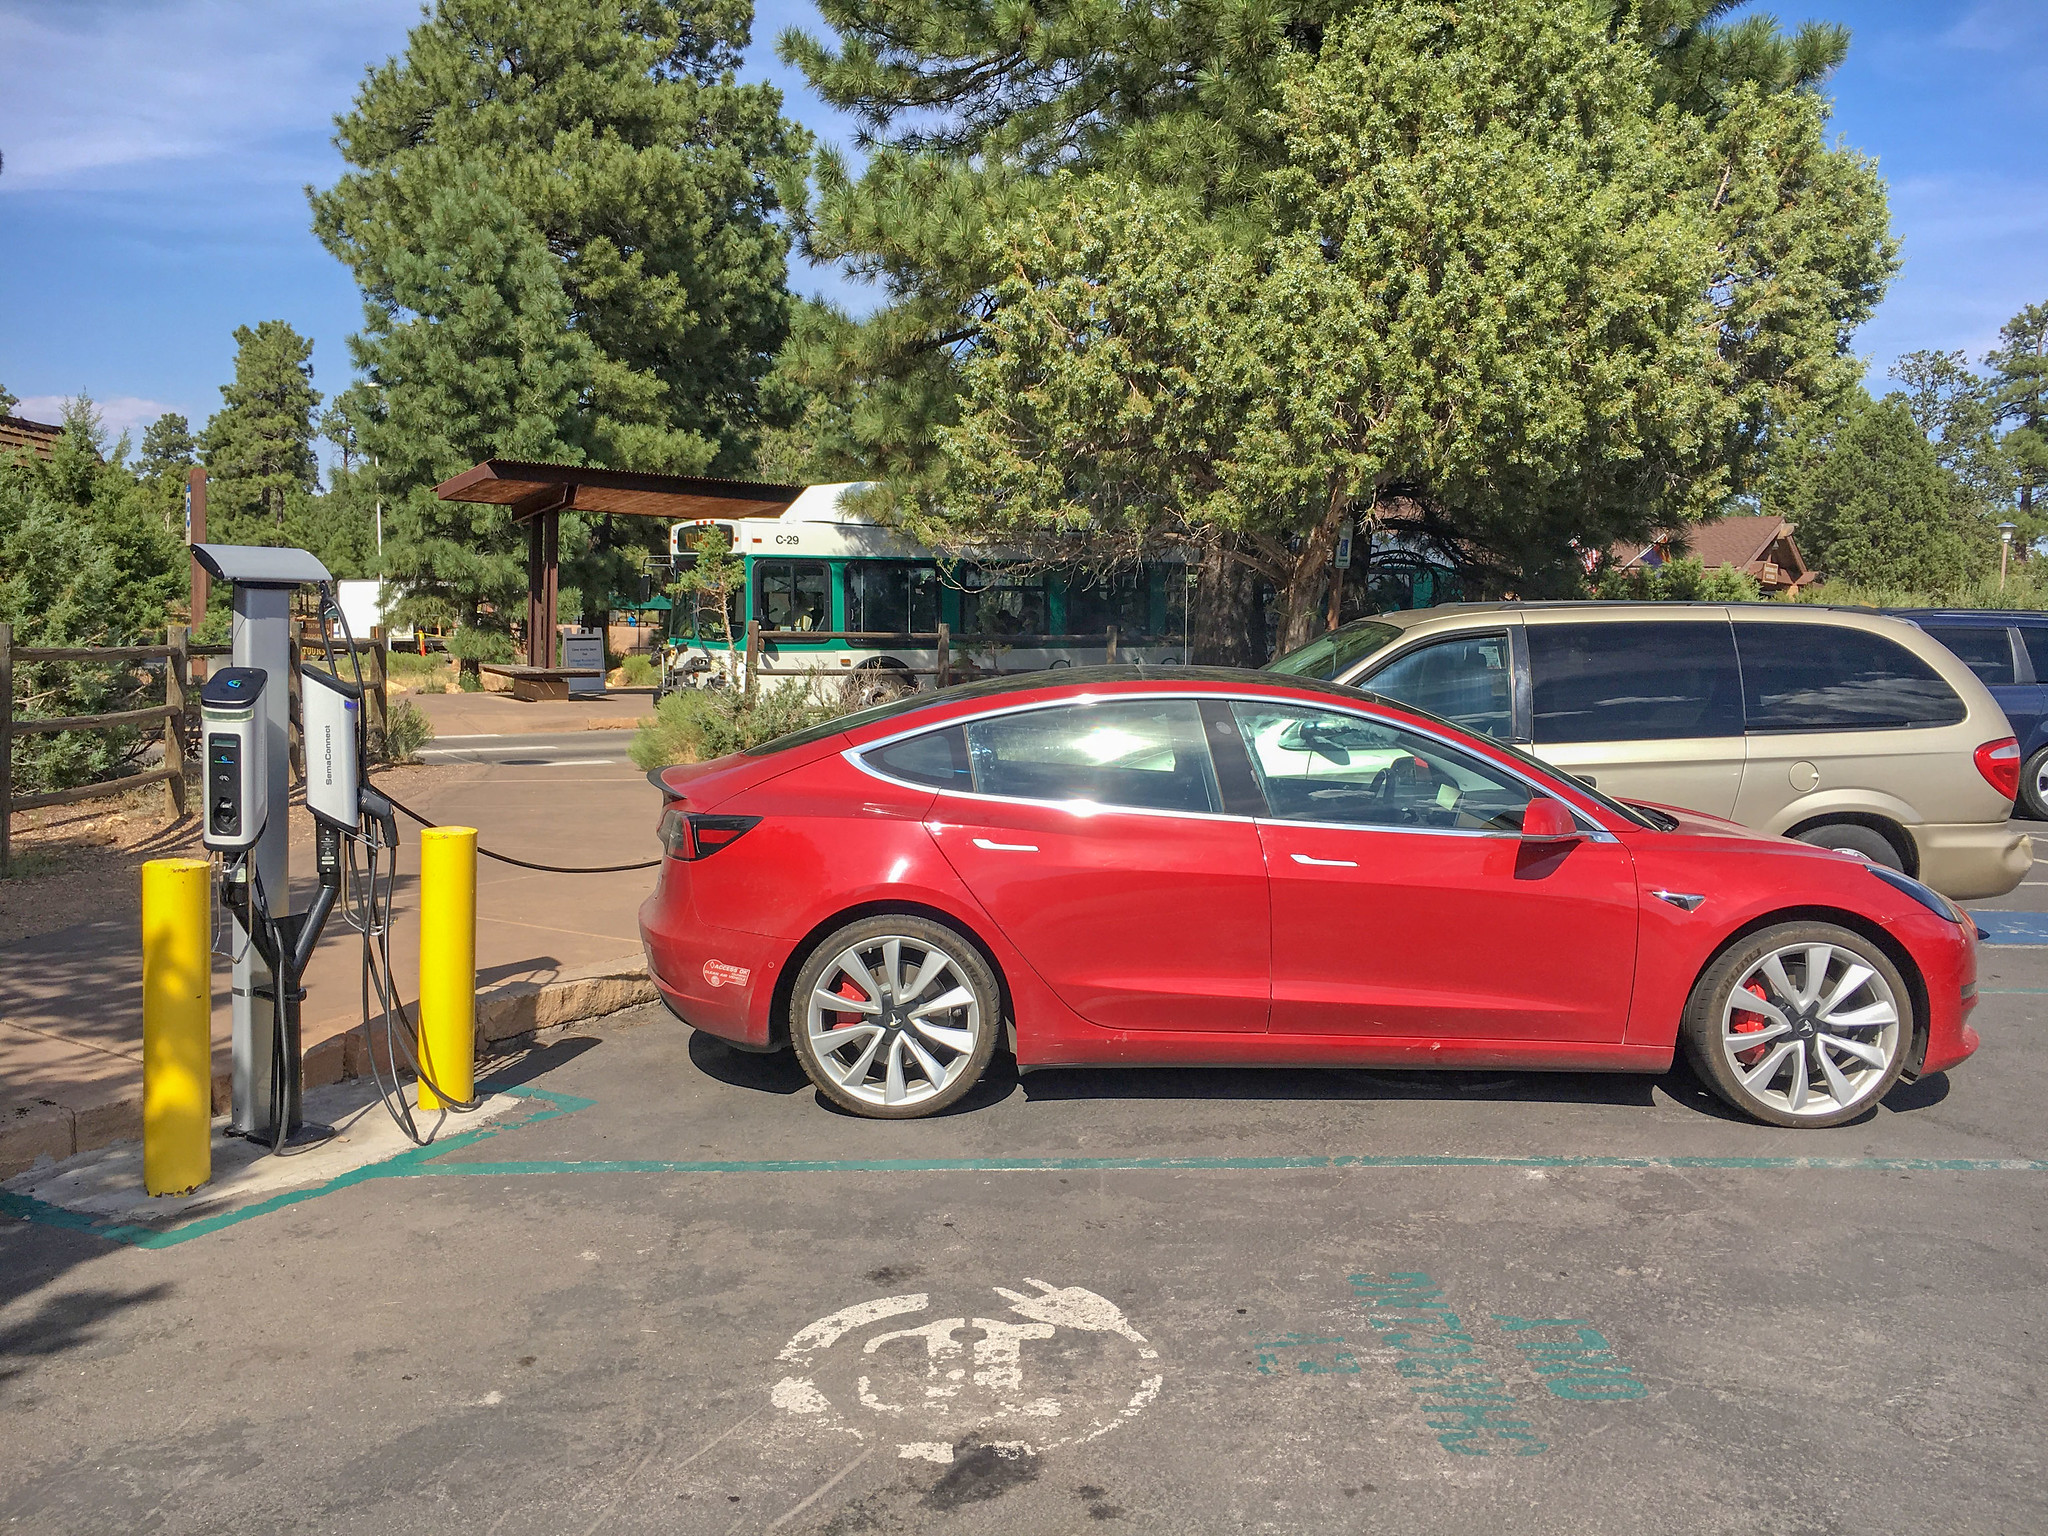 Electric vehicle charging at Grand Canyon National Park